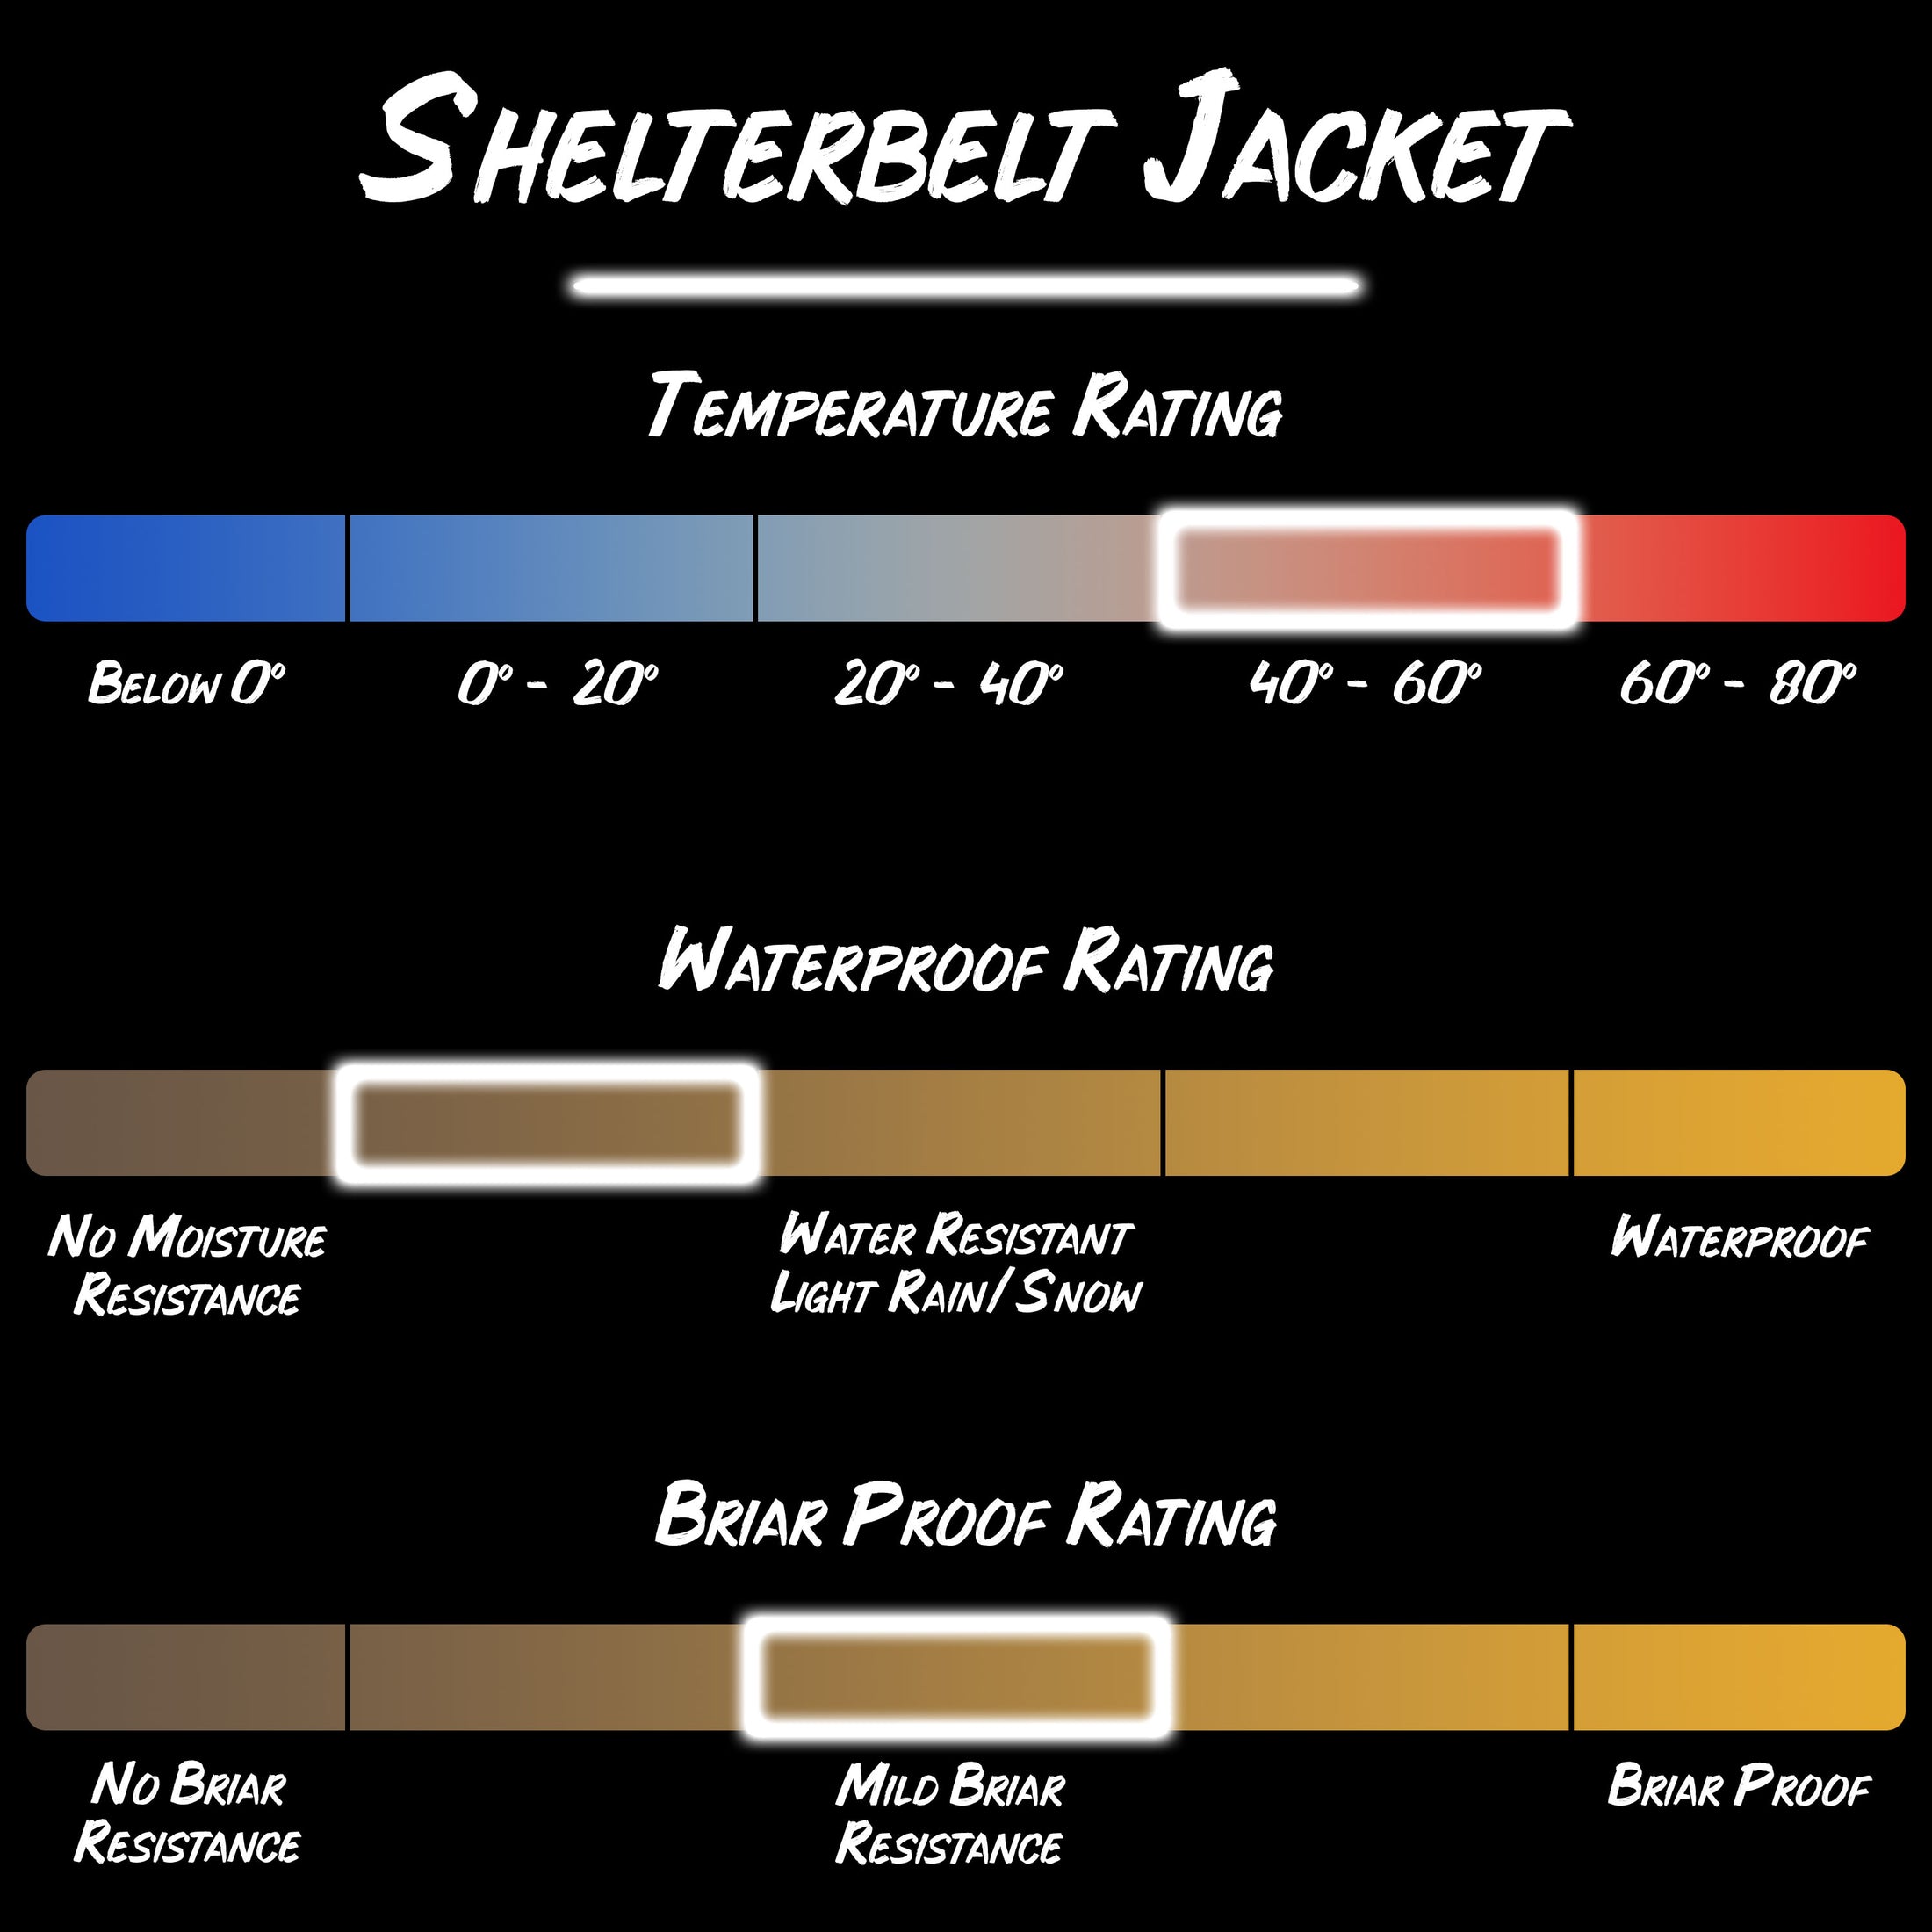 Gamehide shelterbelt jacket product specifications